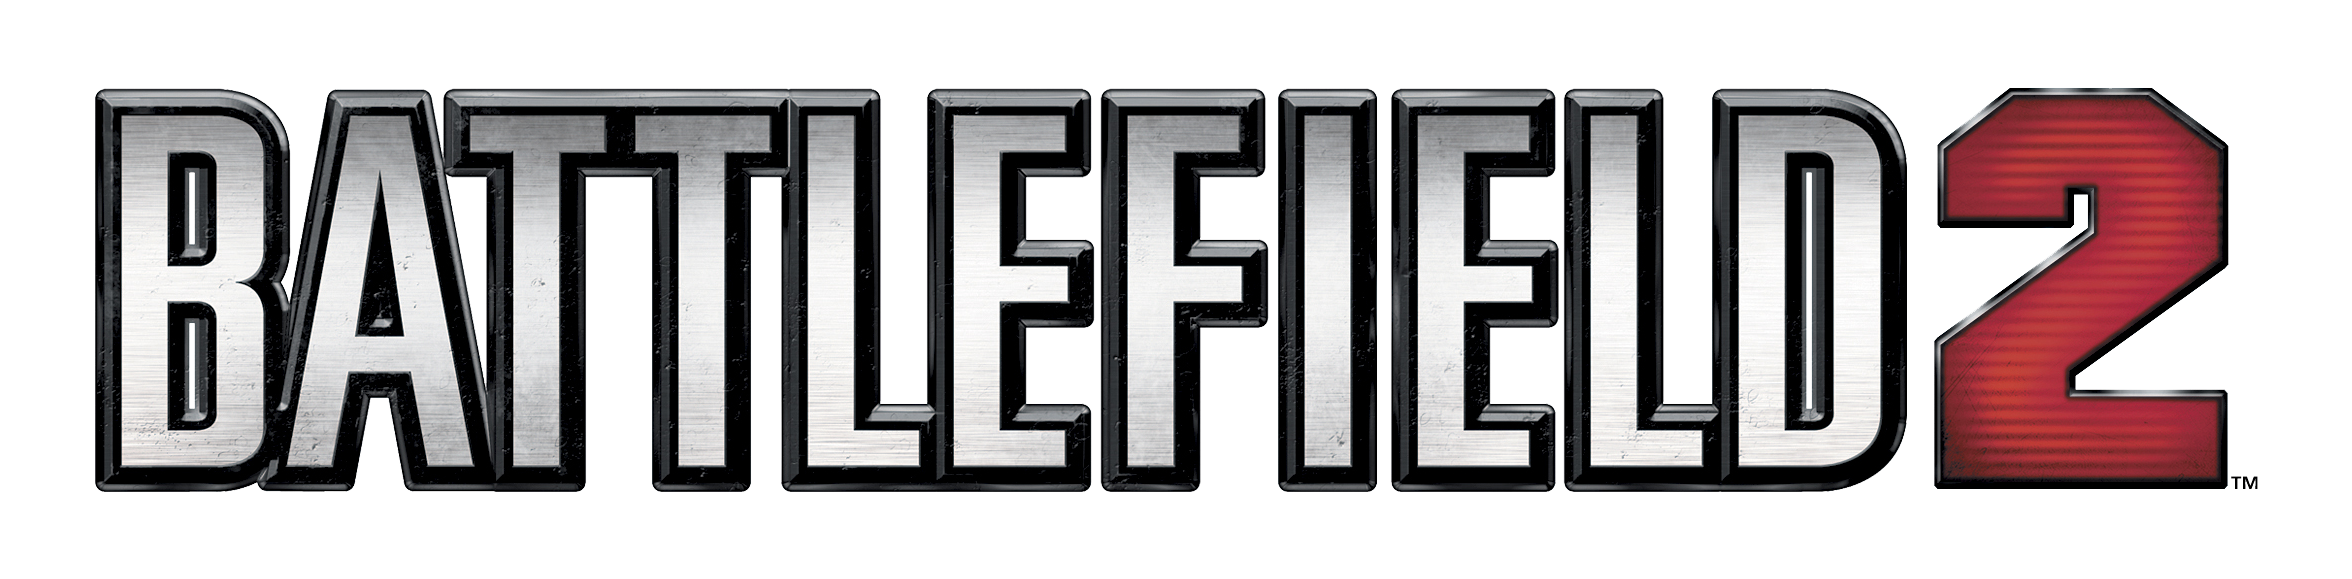 Battlefield 2 logo PNG